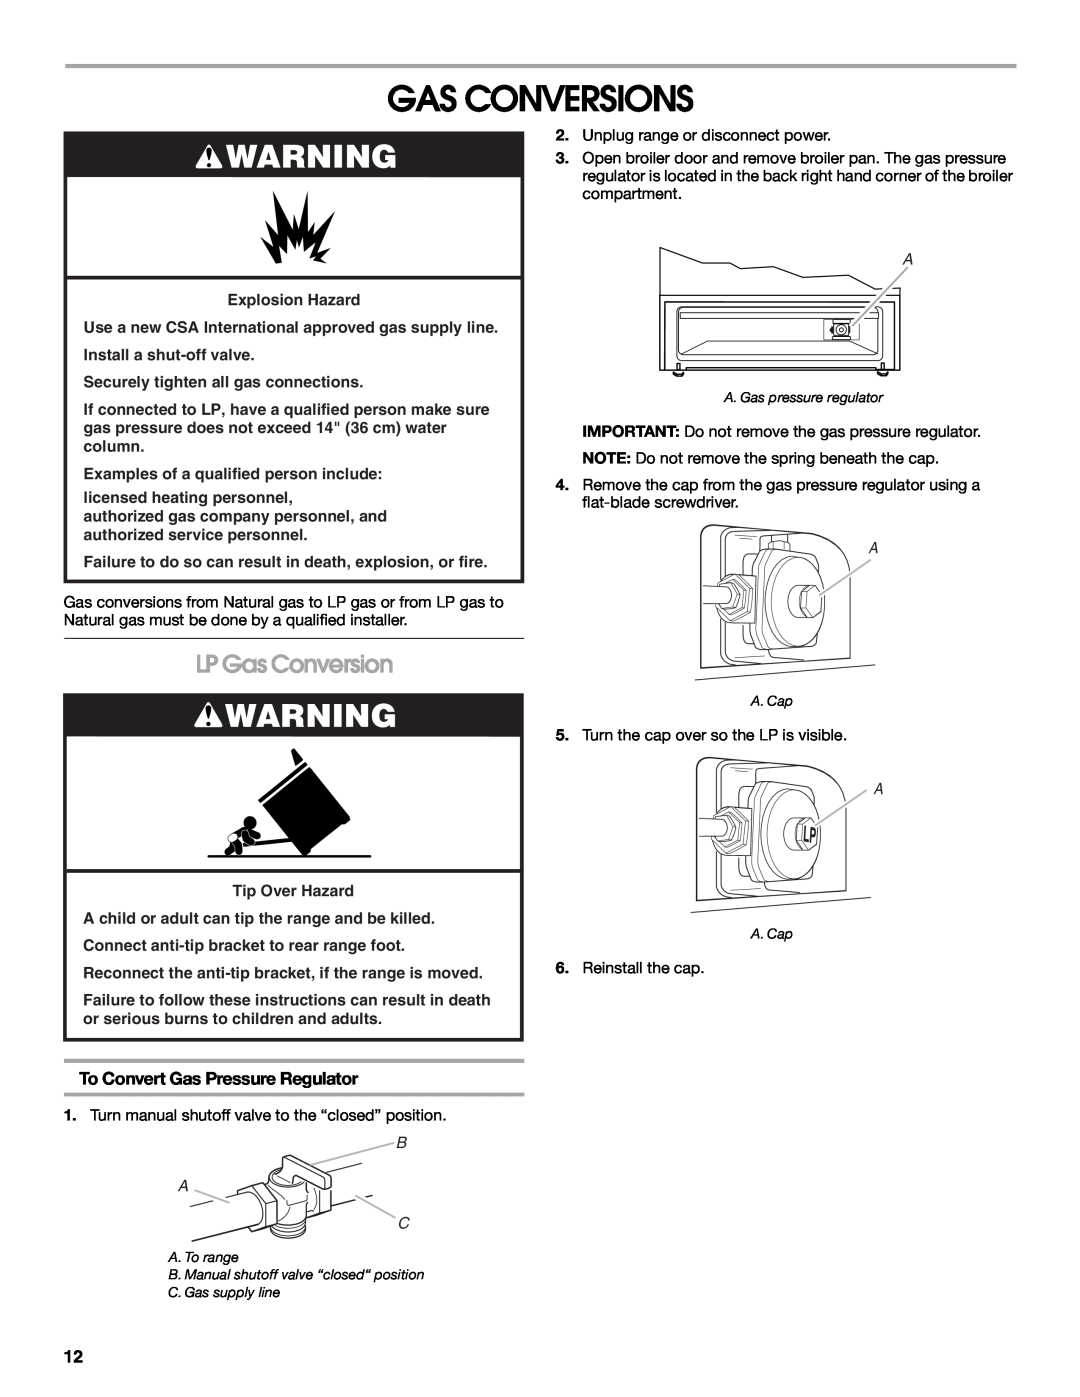 Whirlpool W10032050B installation instructions Gas Conversions, LP Gas Conversion, To Convert Gas Pressure Regulator, B A C 